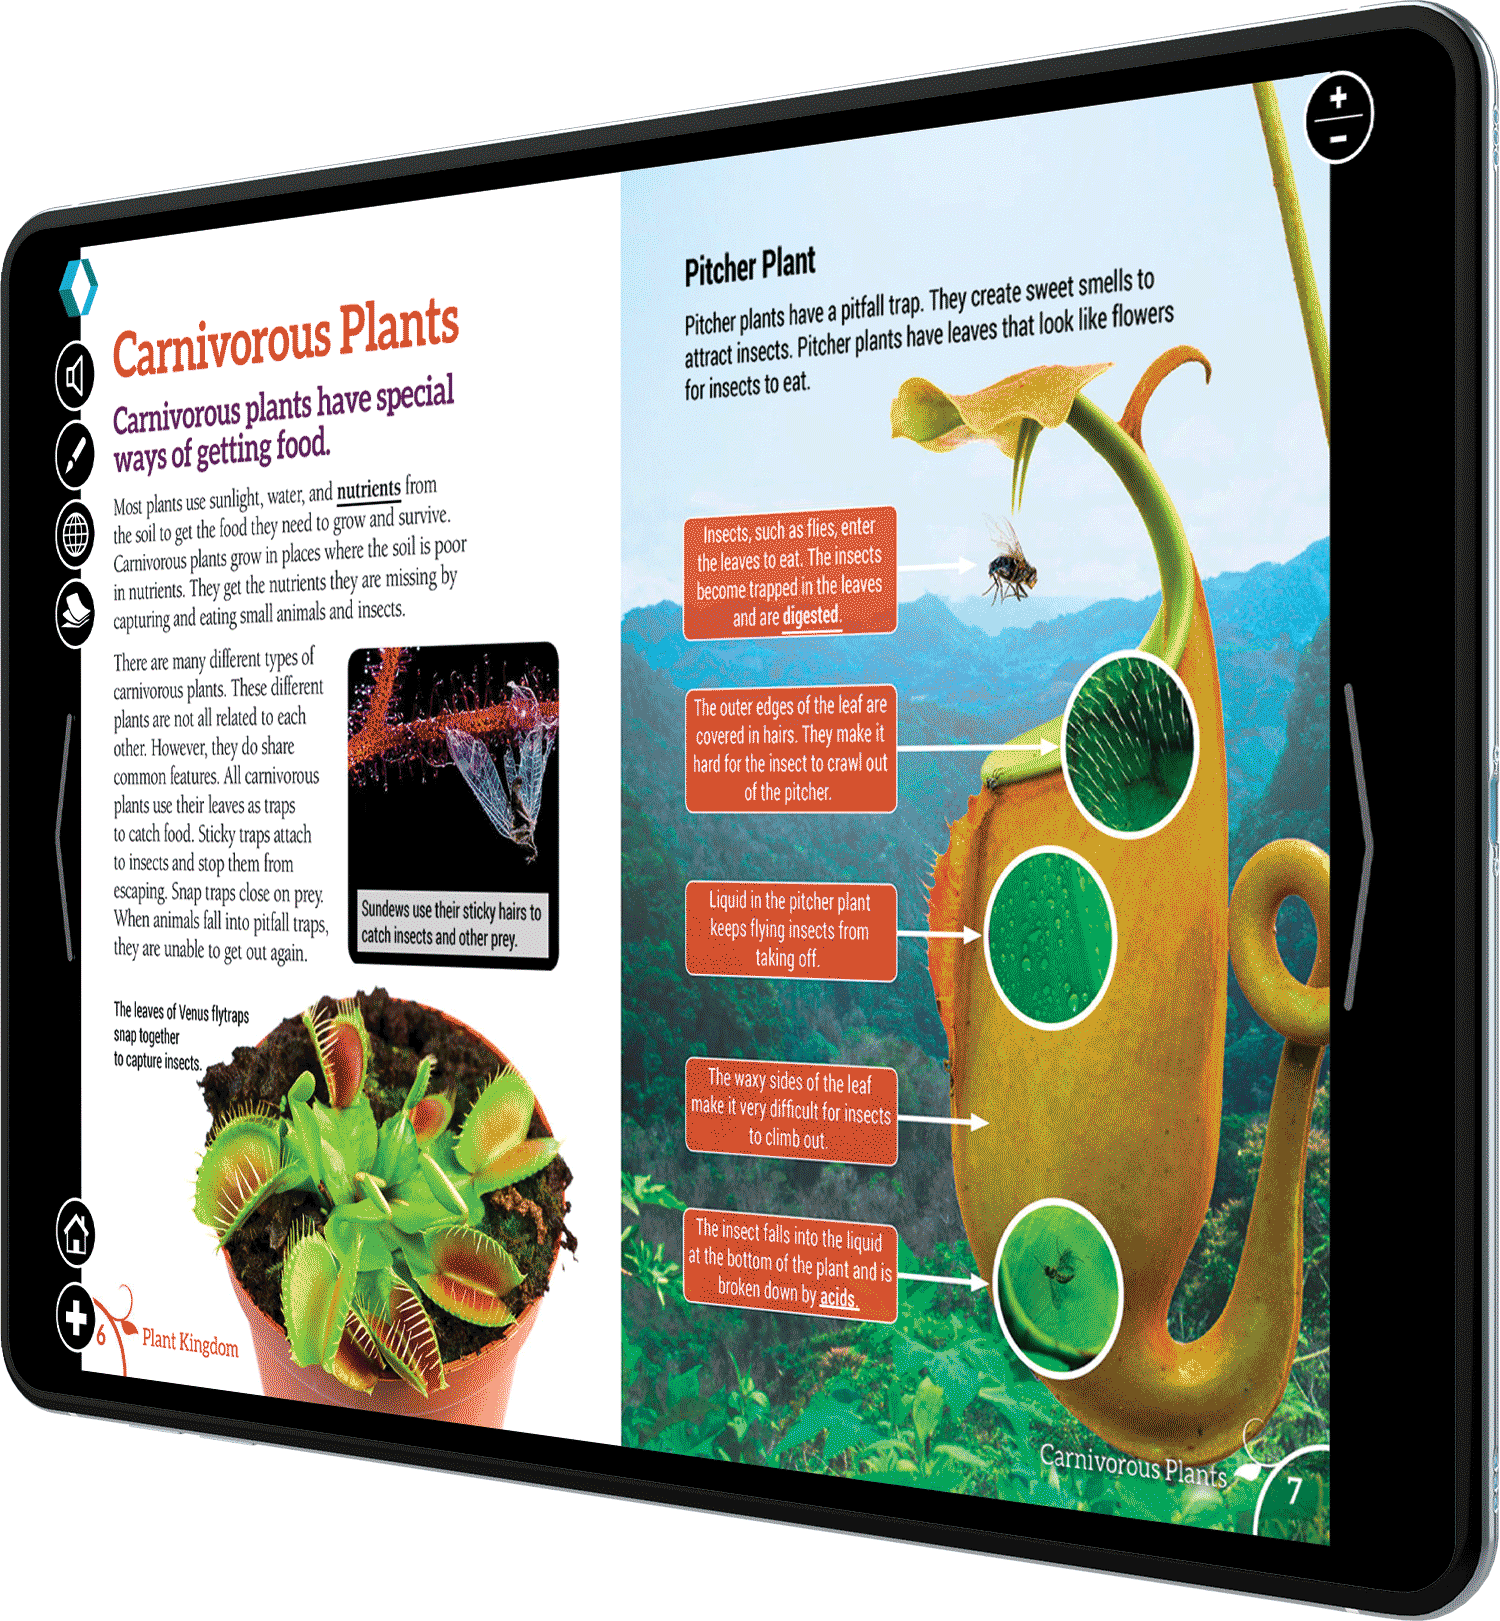 LBX-plant-kingdom-carnivores